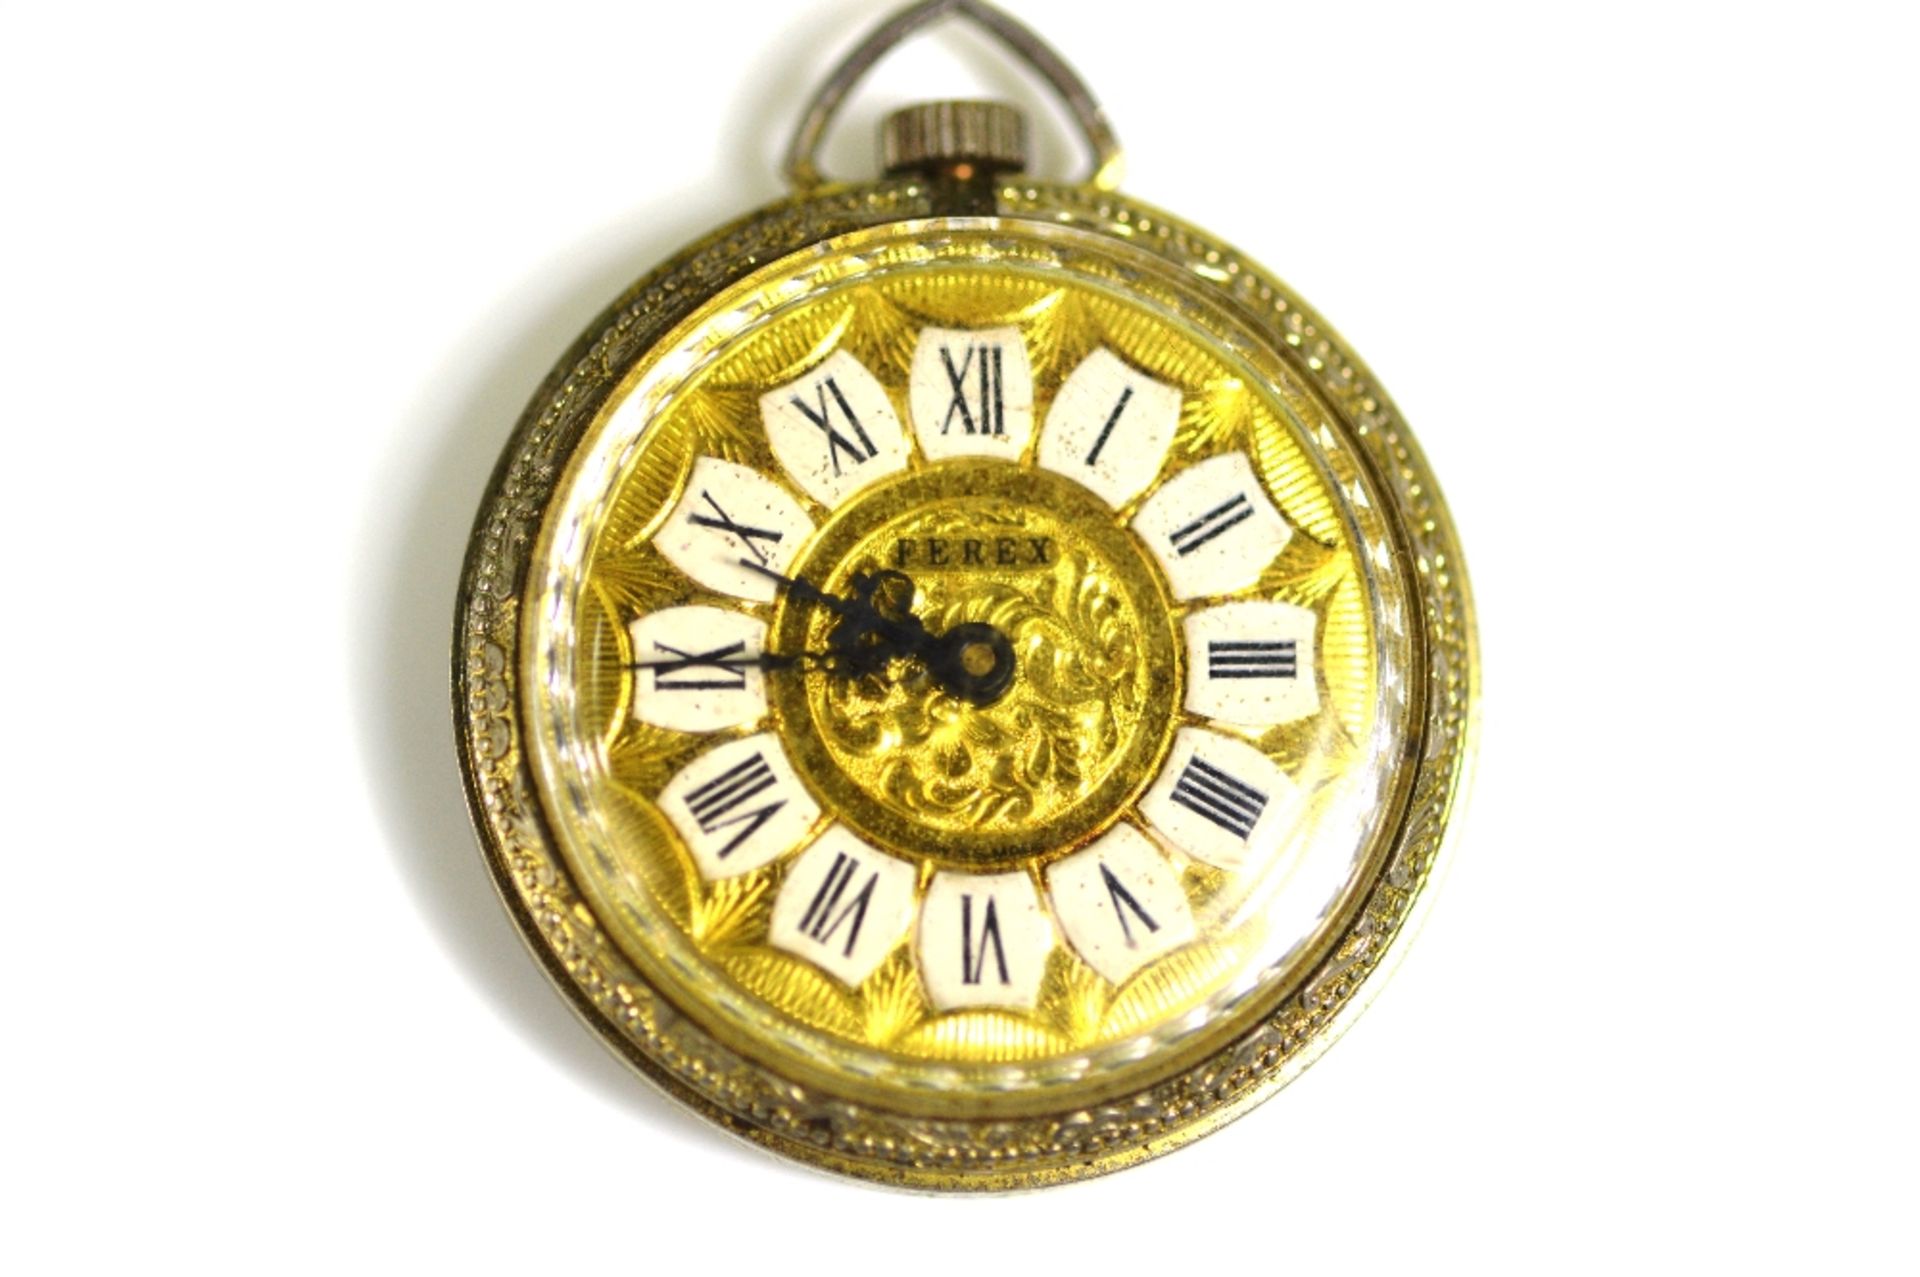 An antique gold plated pocket watch